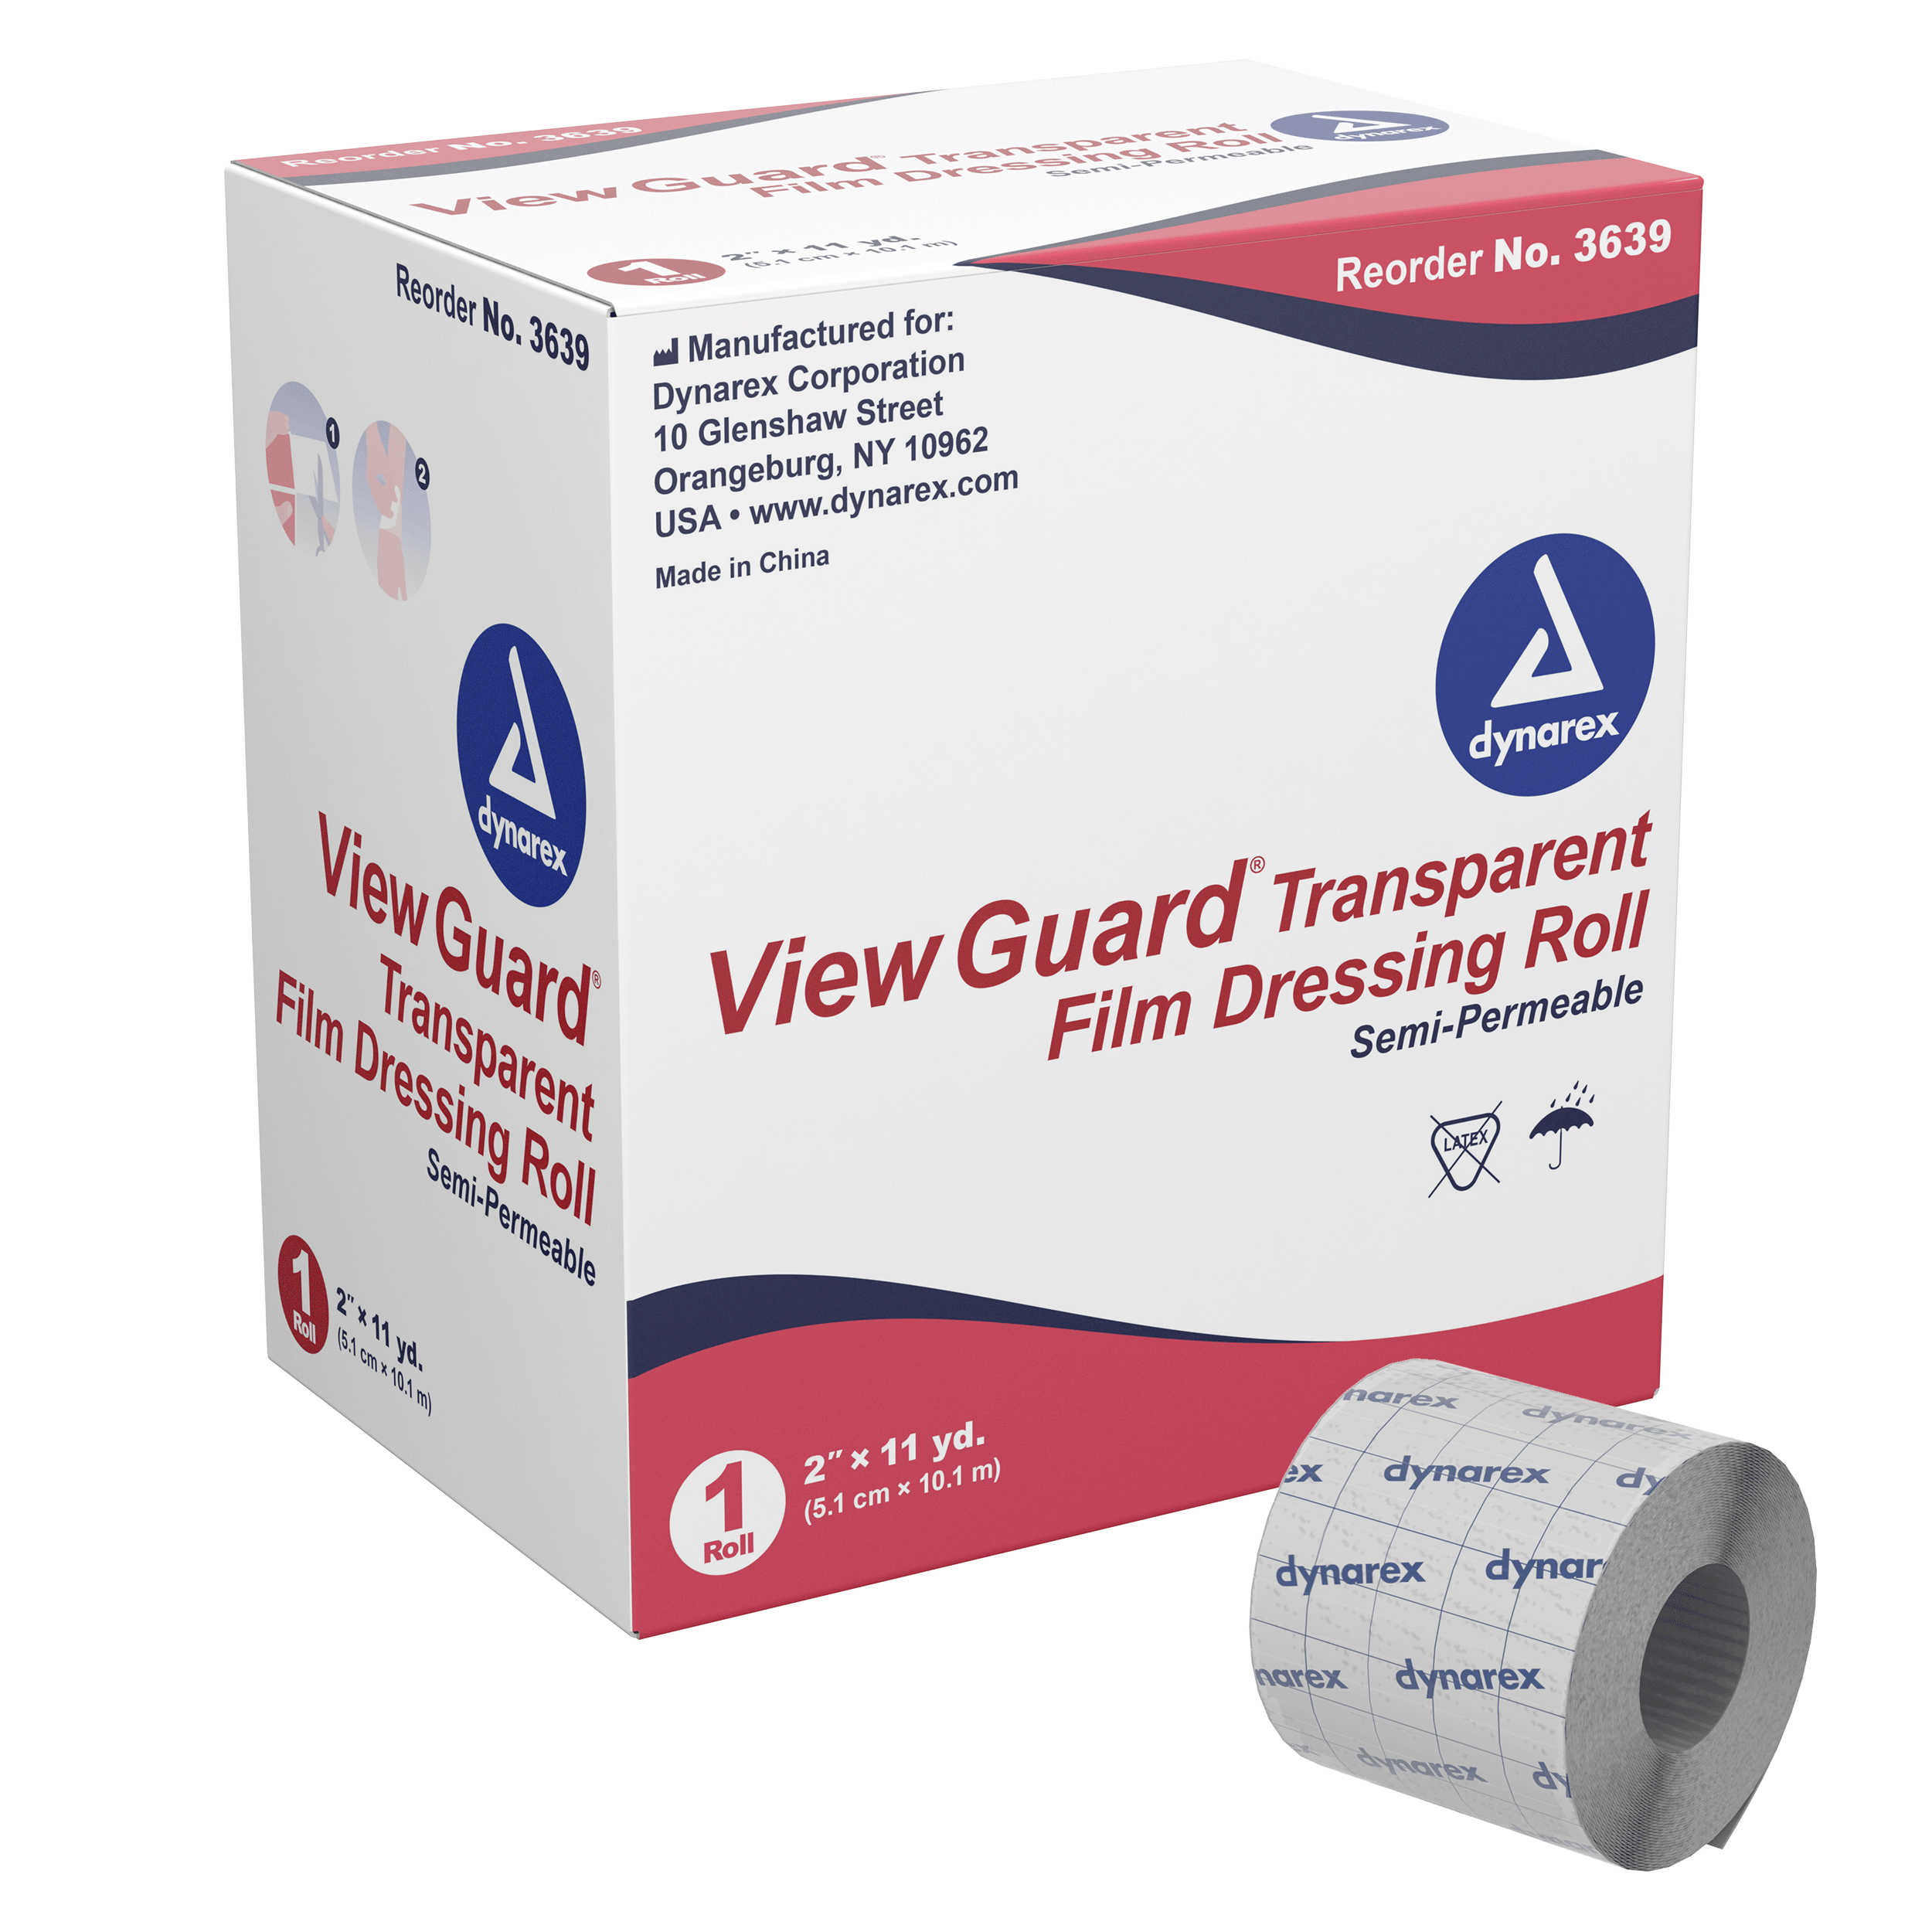 View Guard Transparent Film Dressing Roll 2″ X 11 Yd.